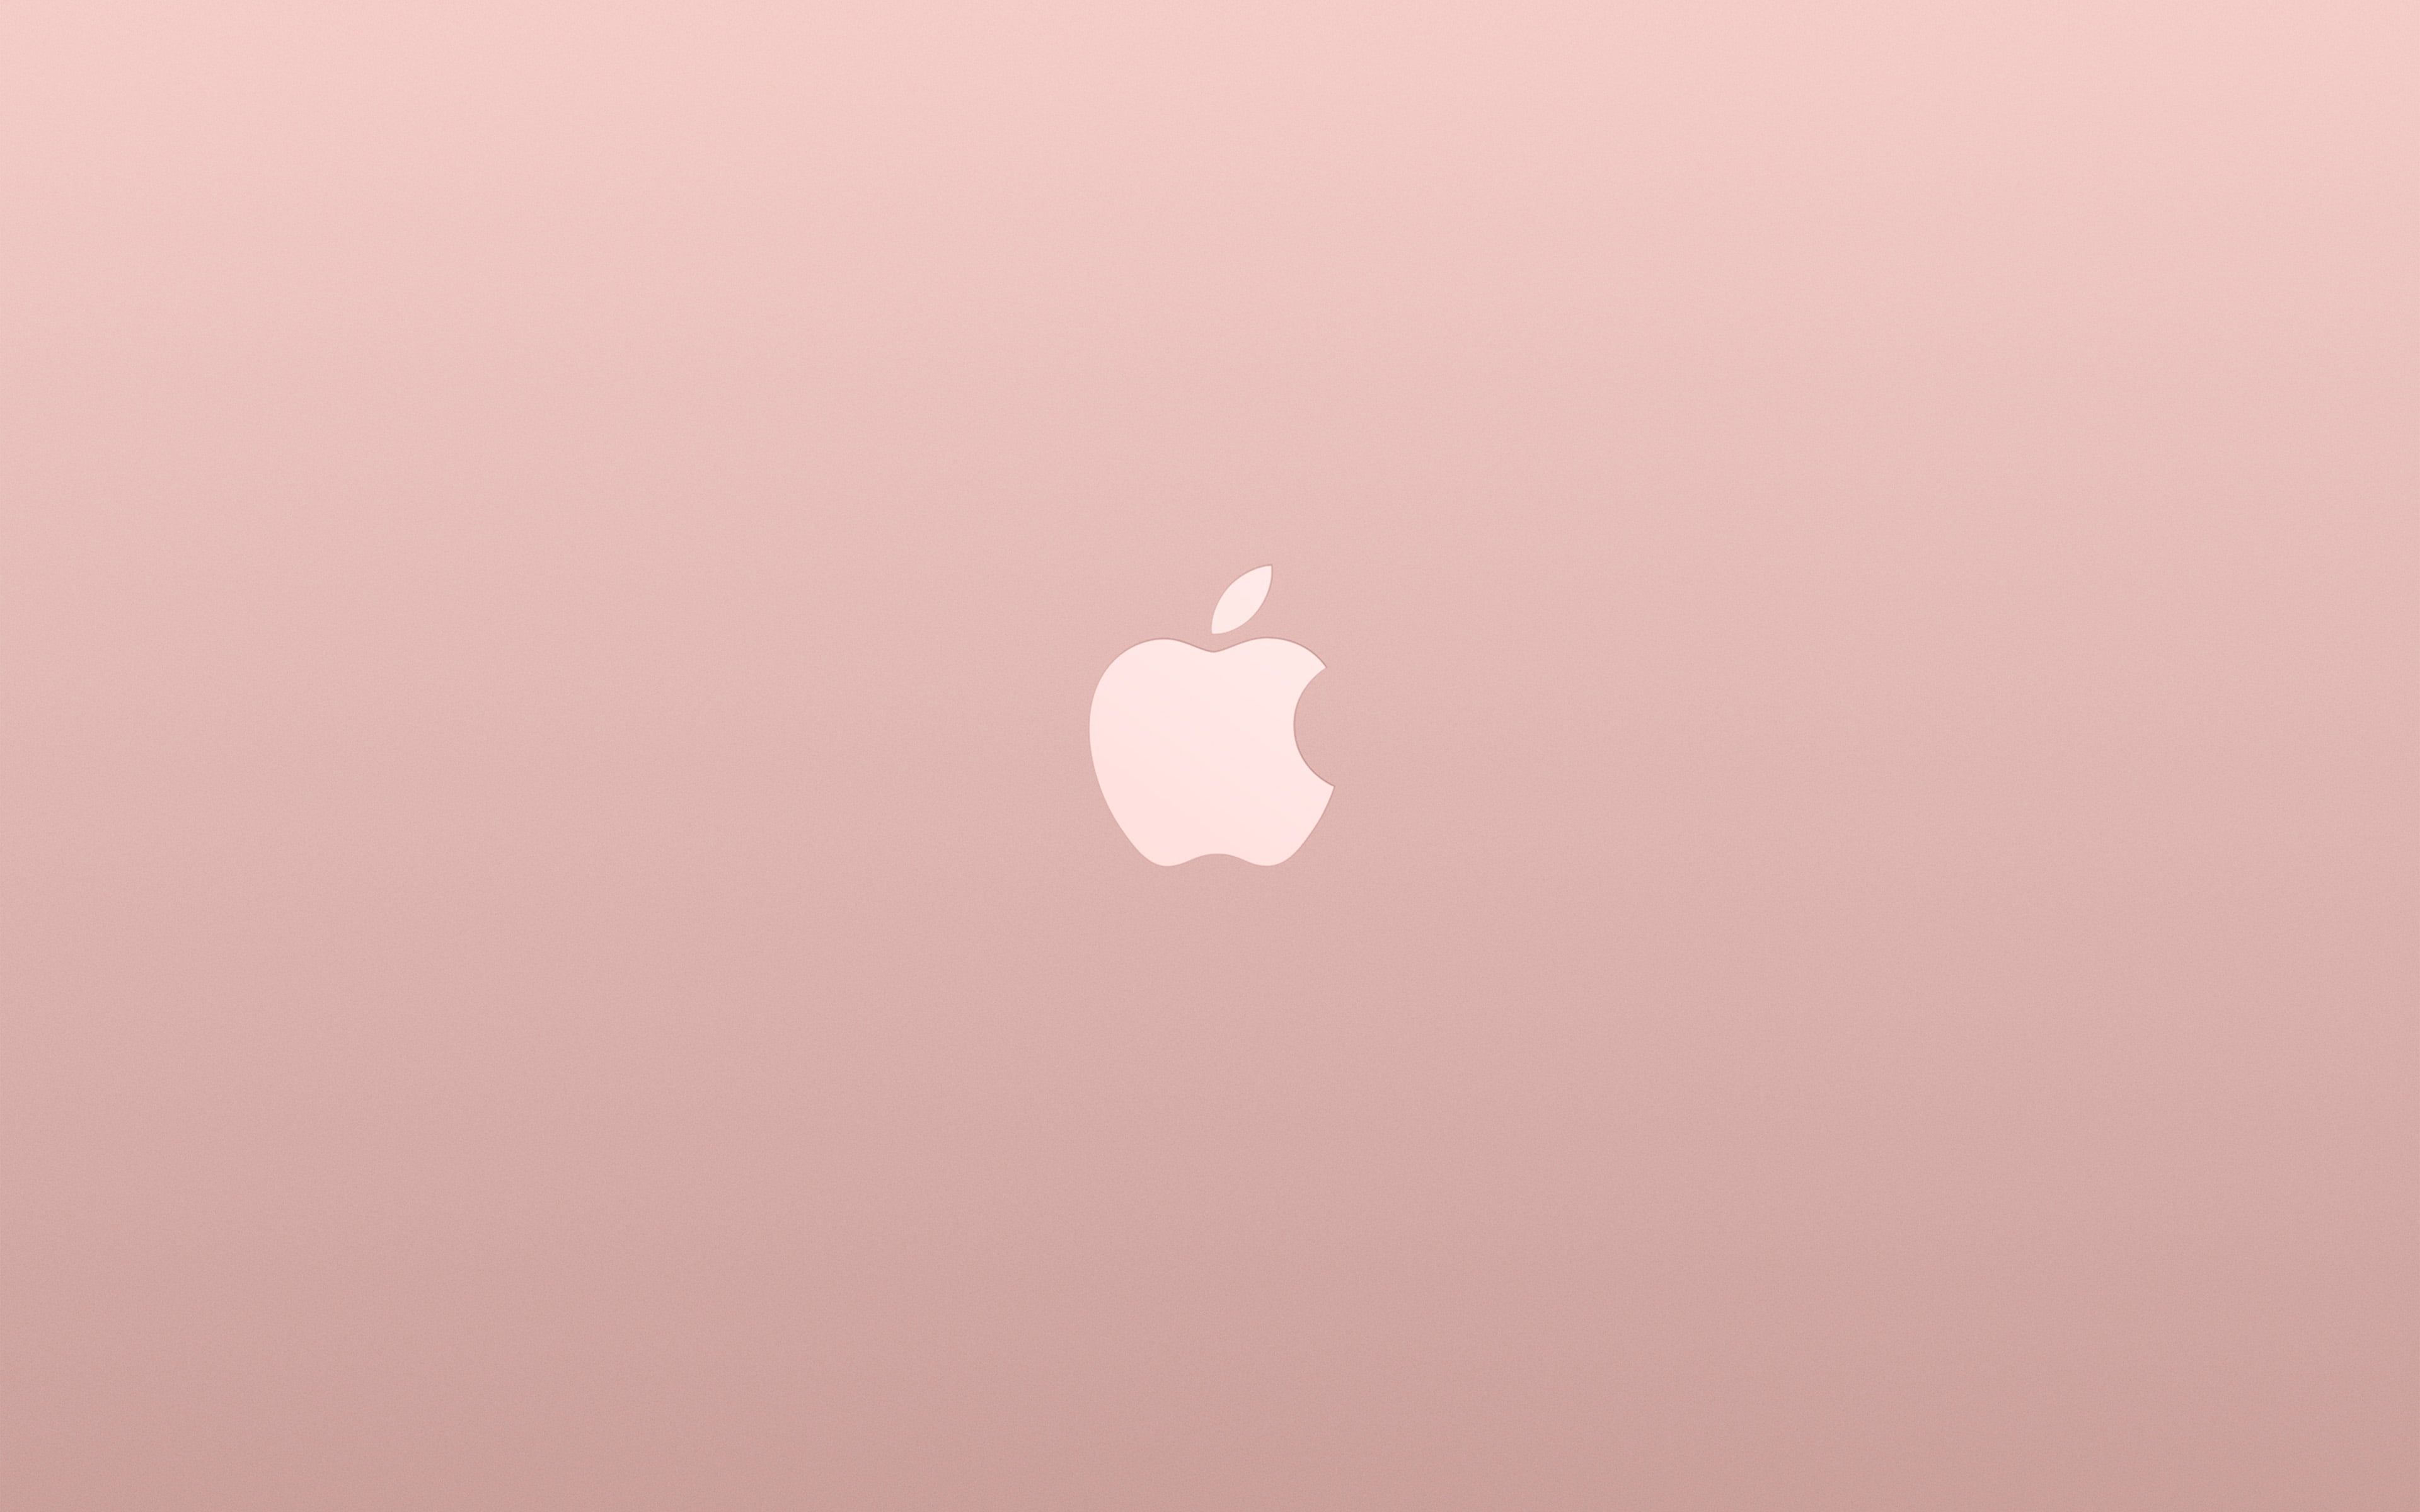 logo #apple #pink #rose #gold #white #minimal #illustration #art K # wallpaper #hdwallpaper. Rose gold wallpaper iphone, Pink wallpaper, Pink and gold wallpaper